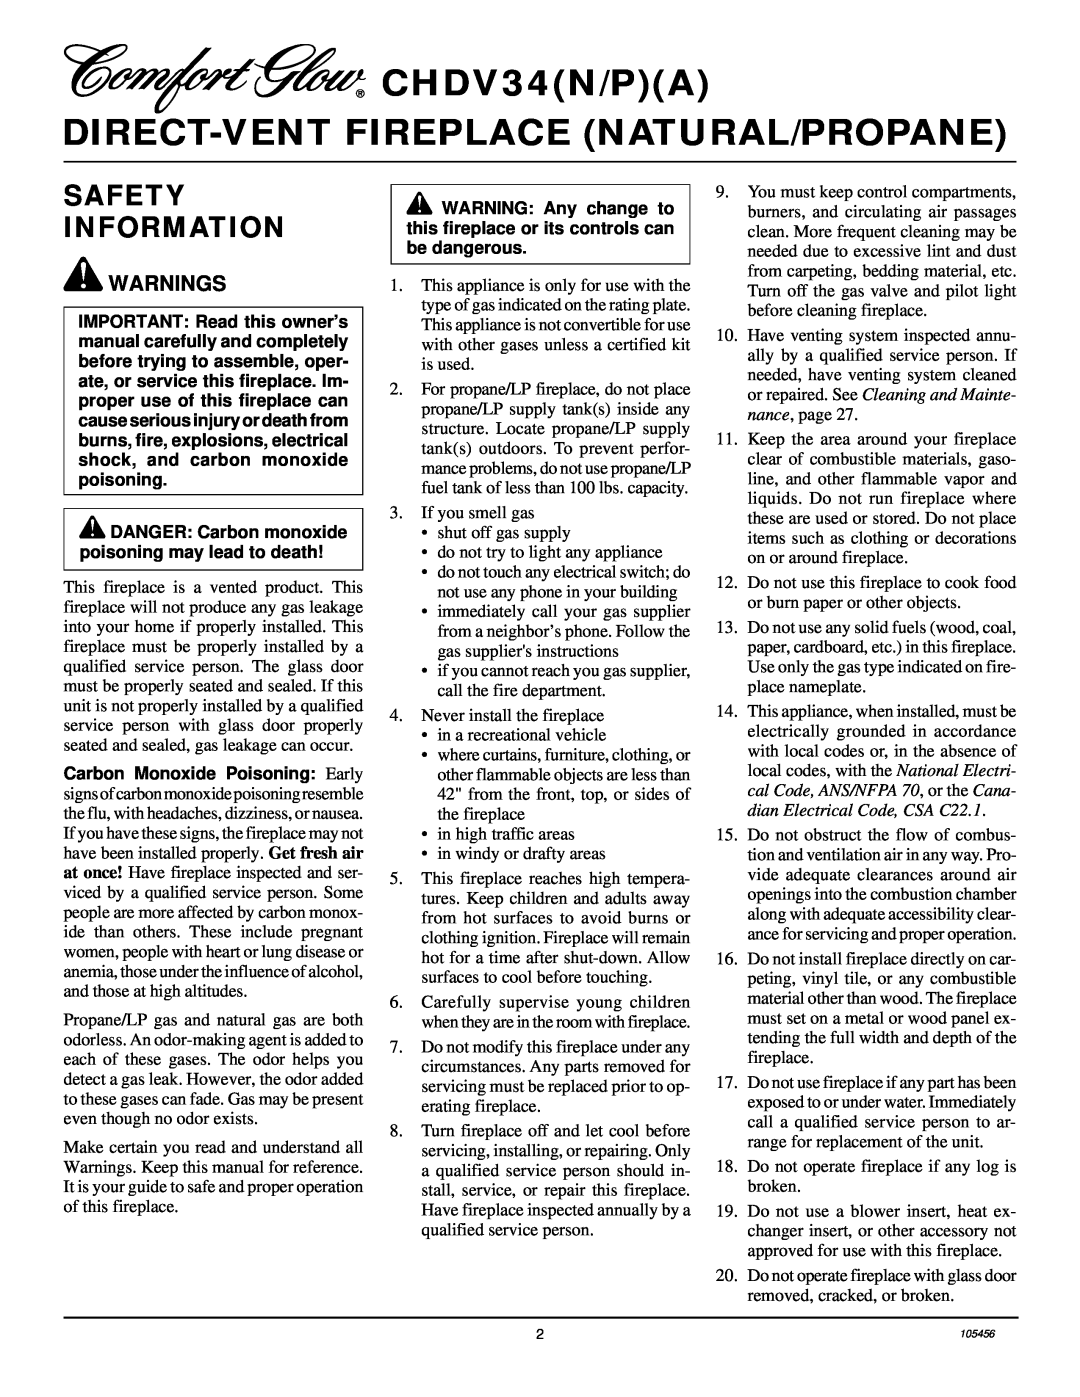 Desa CHDV34(N/P)(A) installation manual CHDV34N/PA DIRECT-VENTFIREPLACE NATURAL/PROPANE, Safety Information, Warnings 